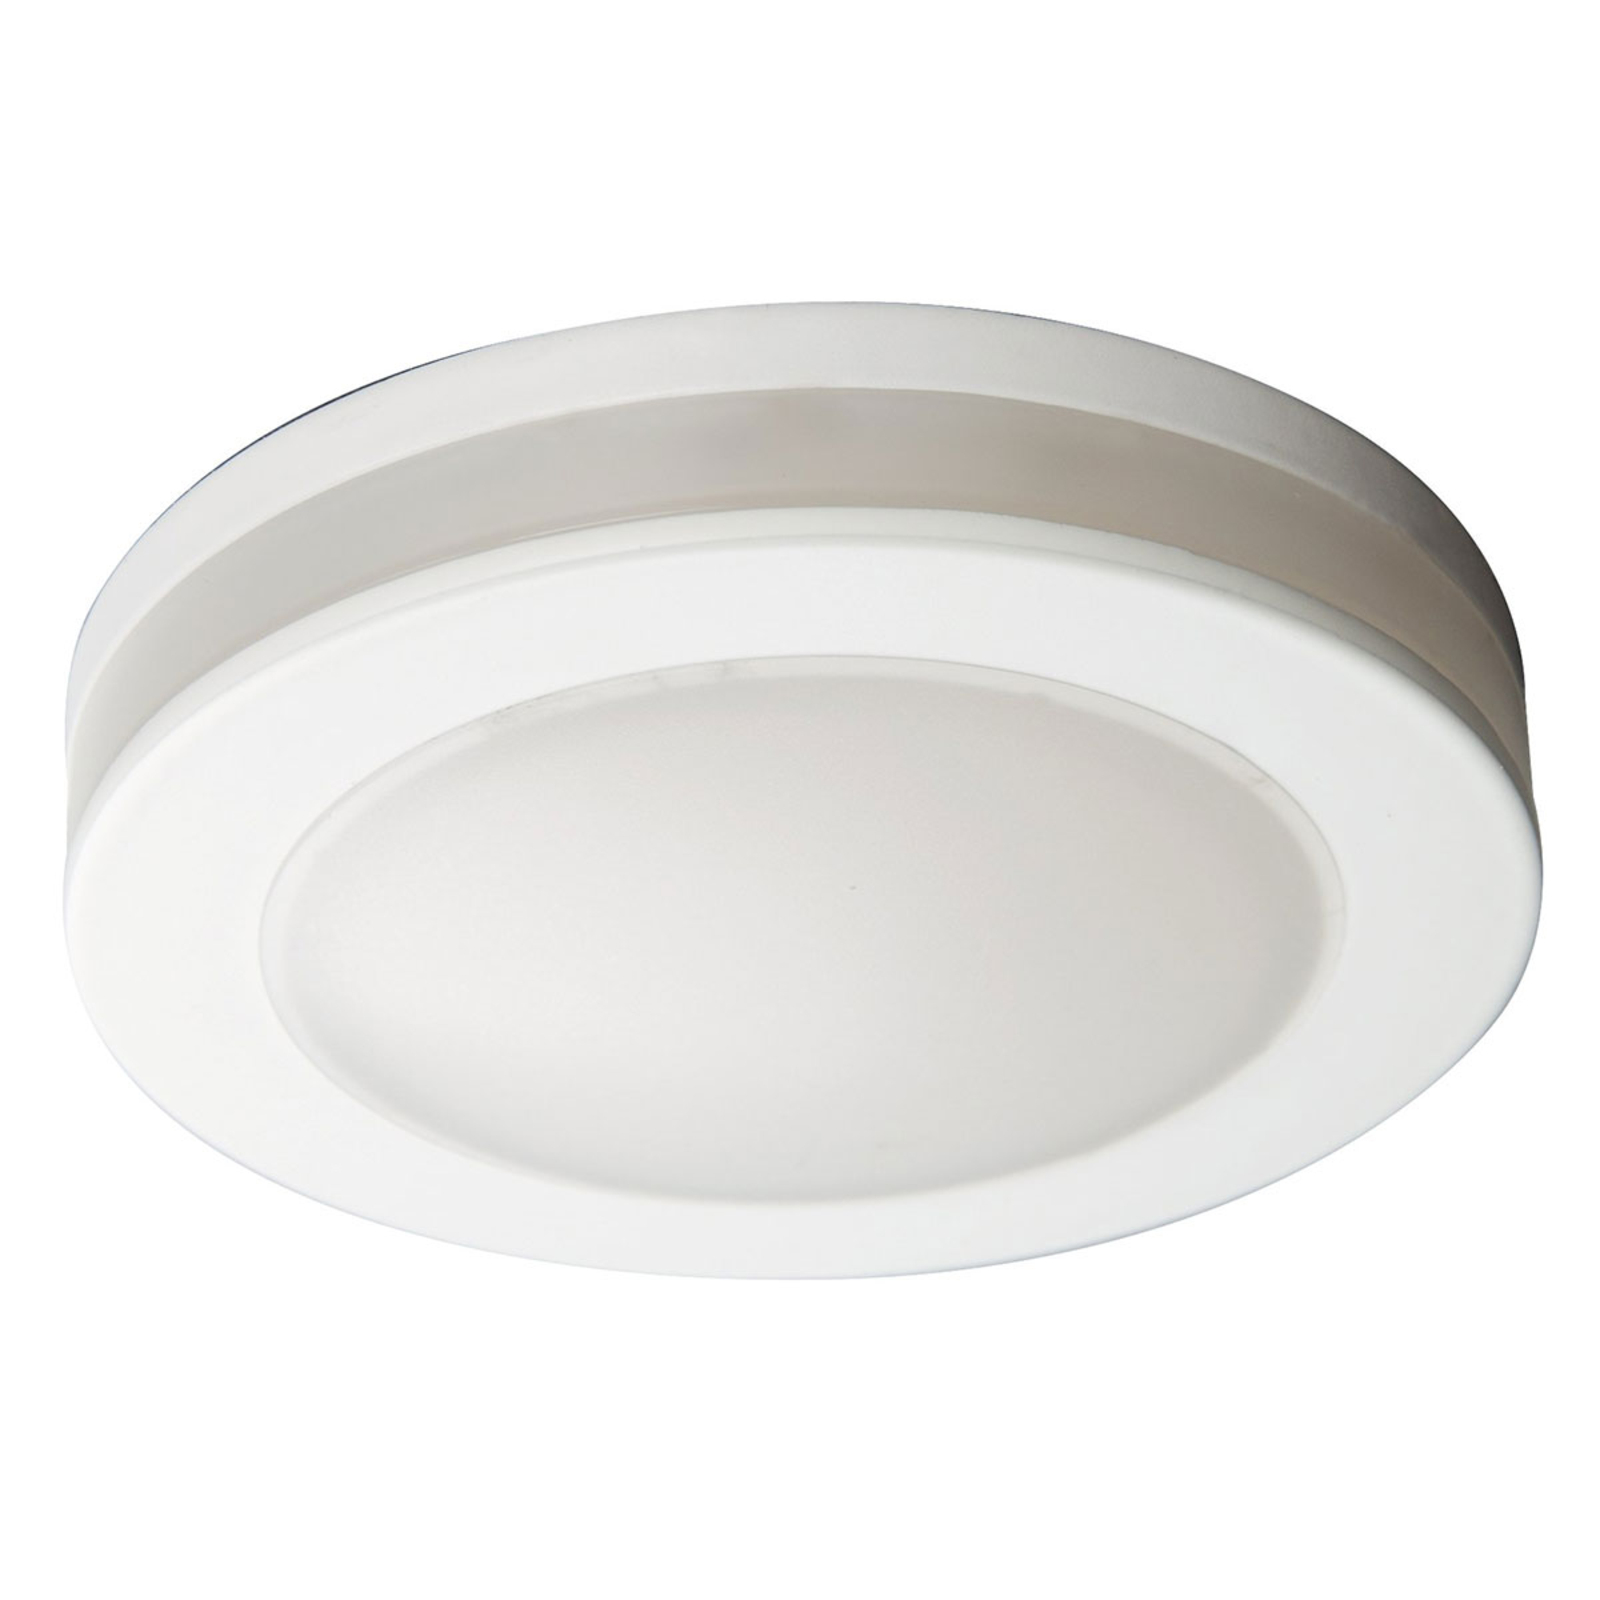 Artemis LED downlight 6 W white